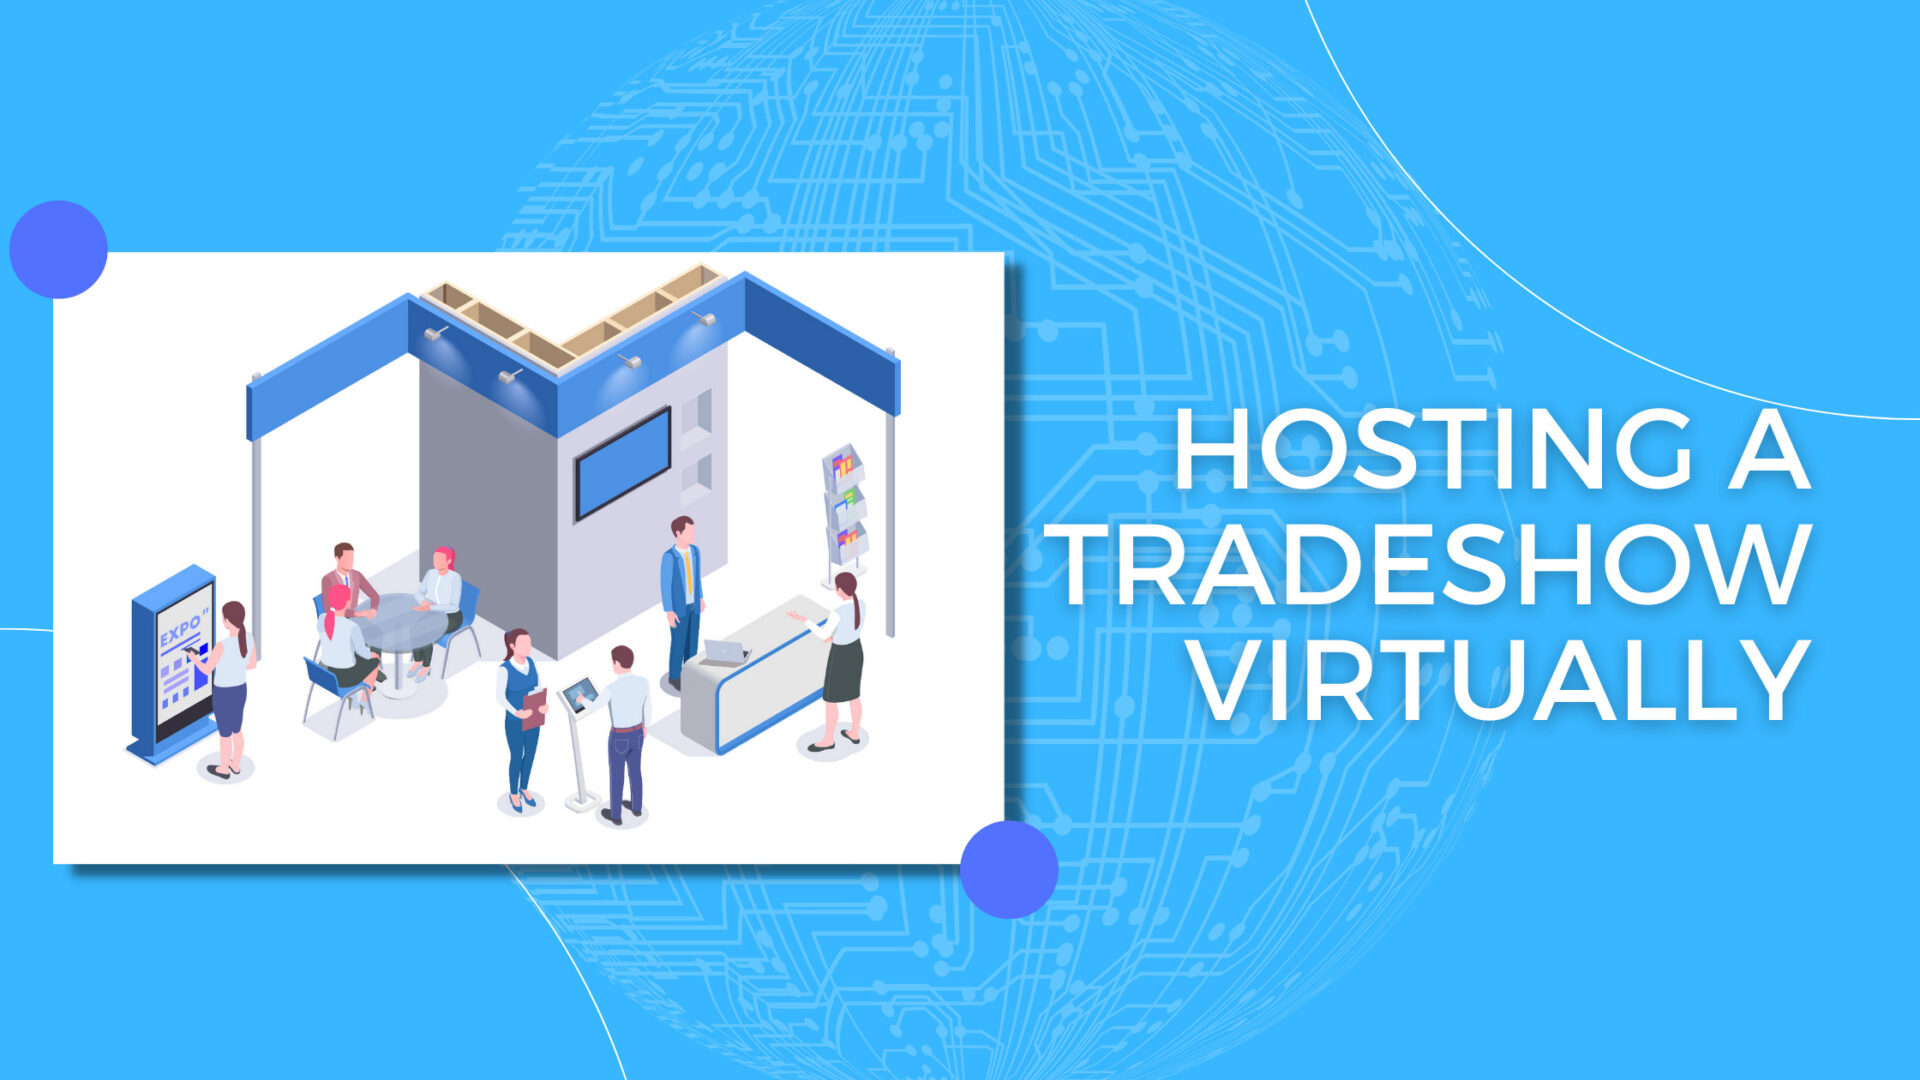 virtual booth image : hosting a trade show virtually